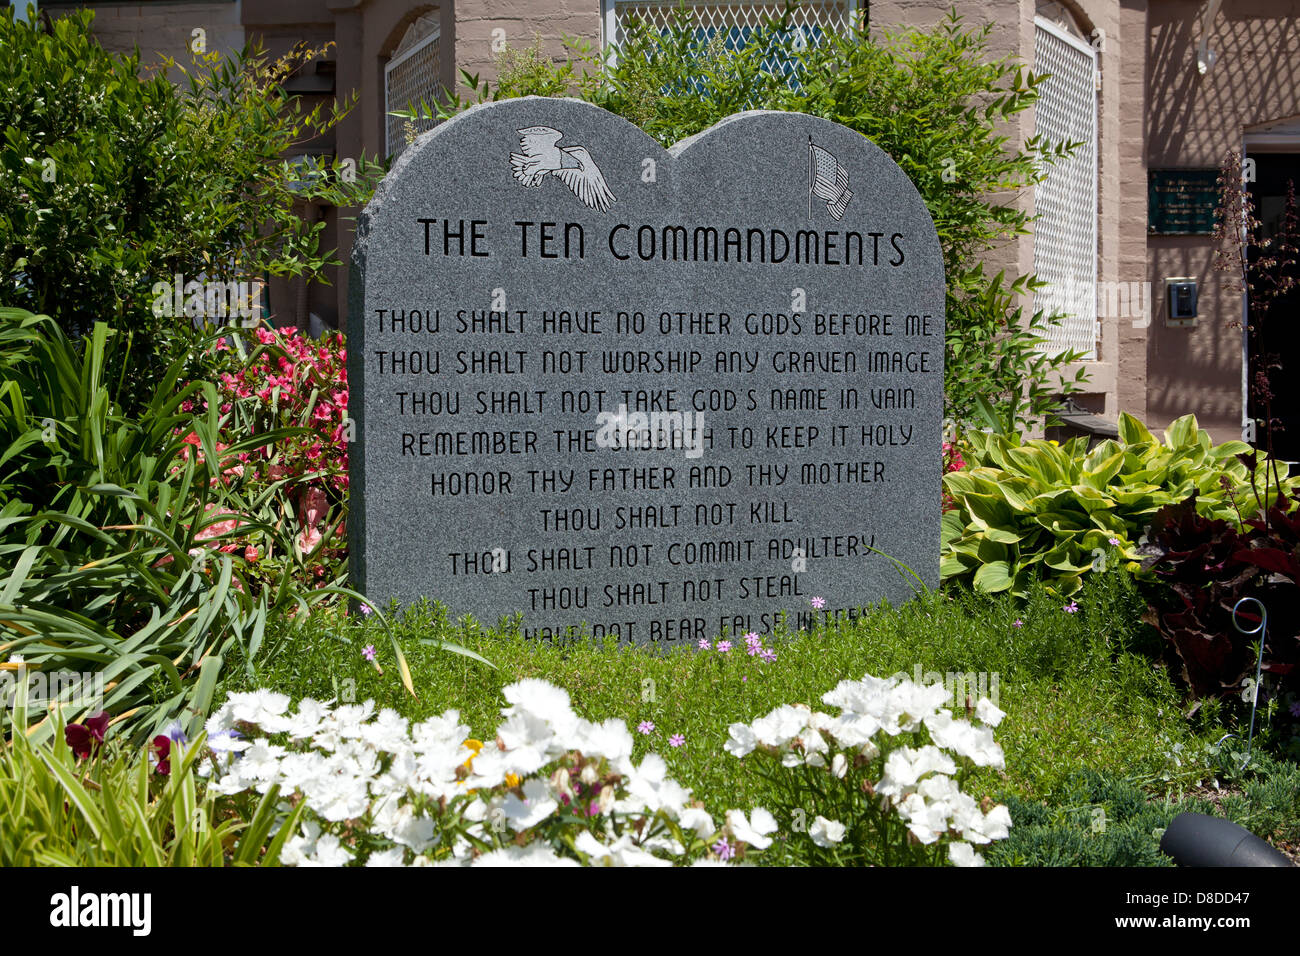 The Ten Commandments stone tablet monument - Washington, DC USA Stock Photo